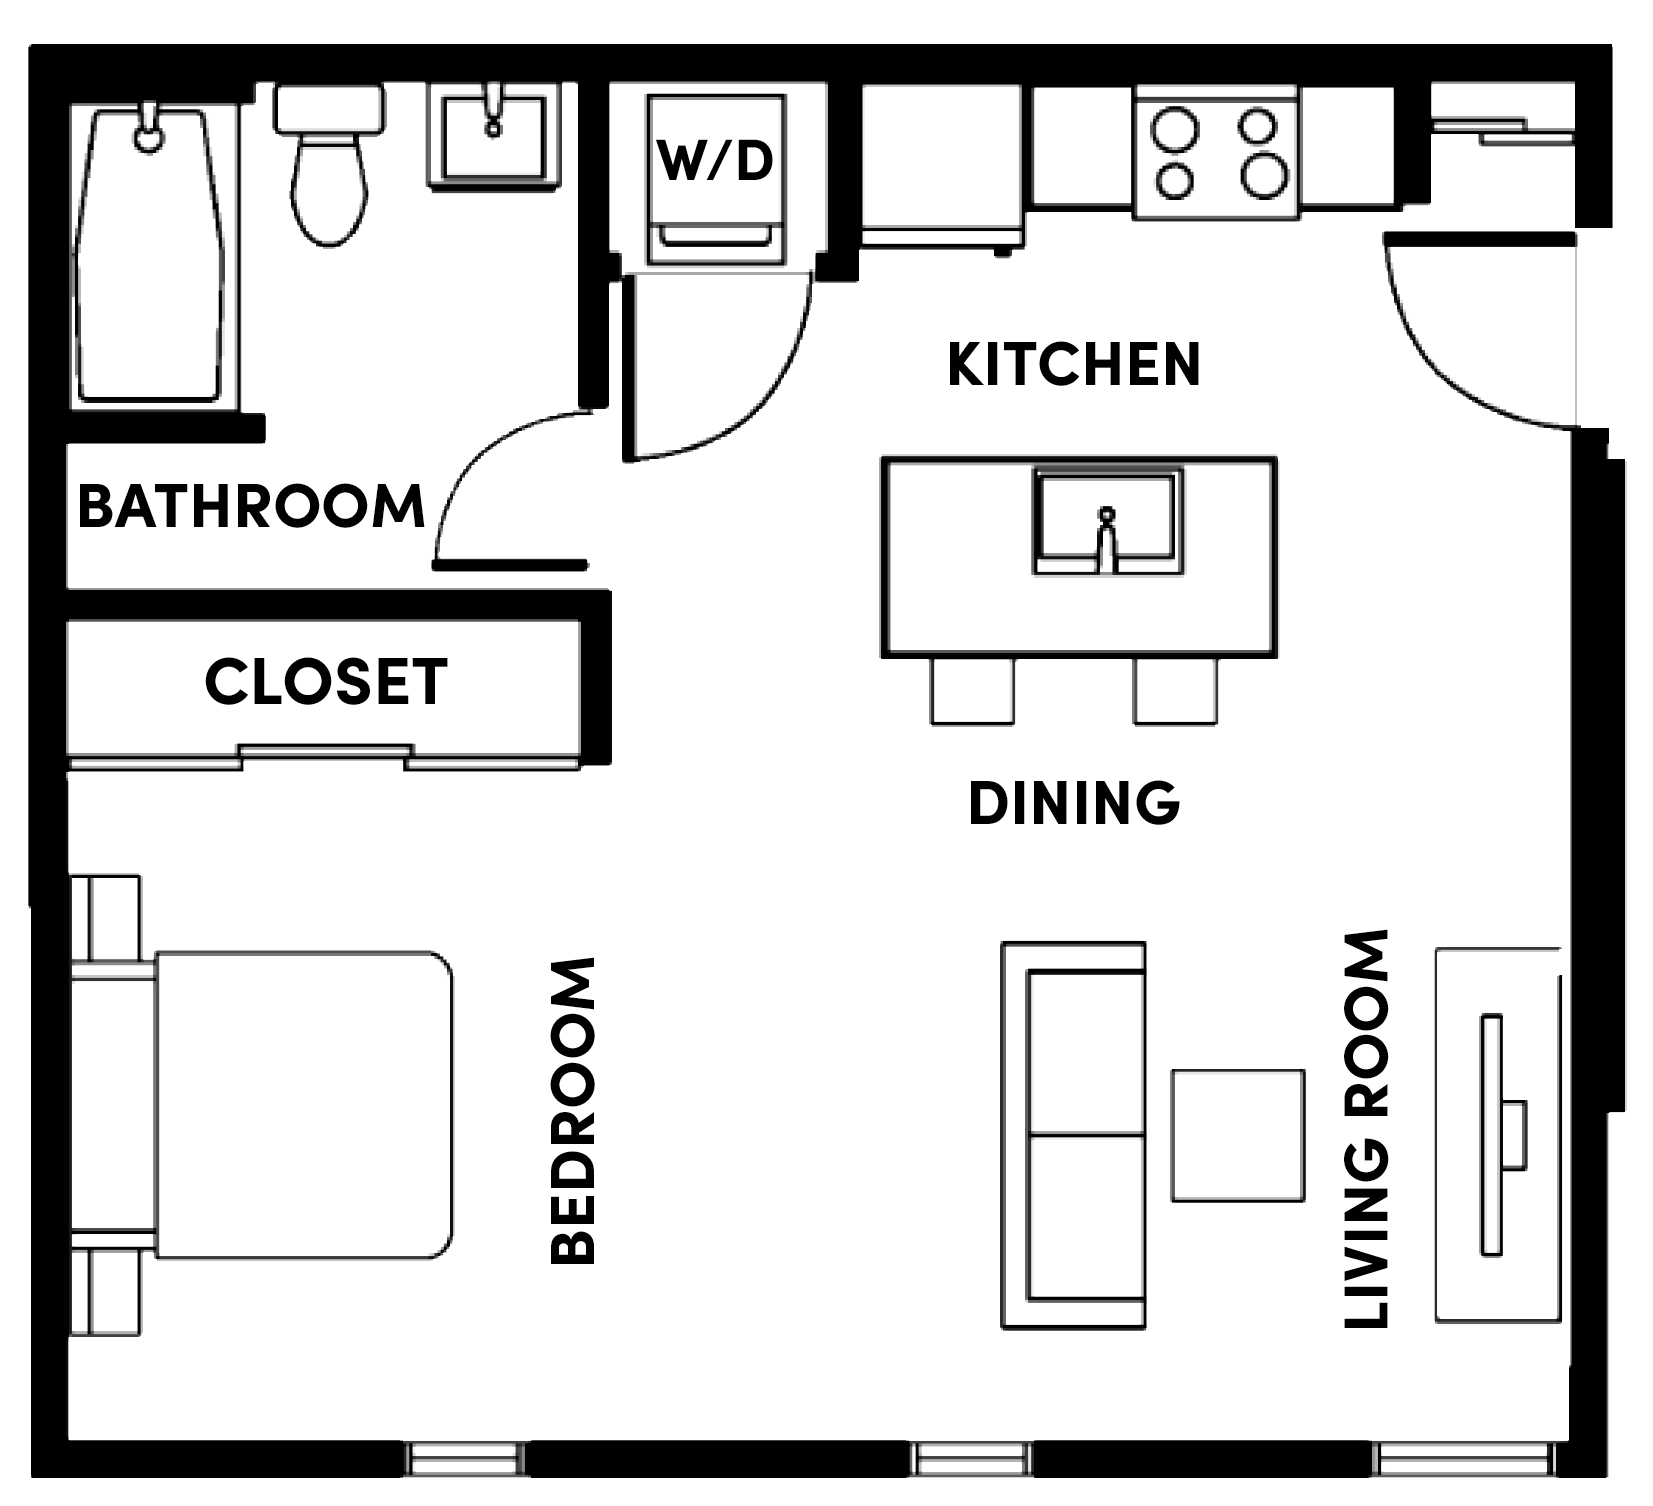 Sample Apartment Floor Plans - Image to u